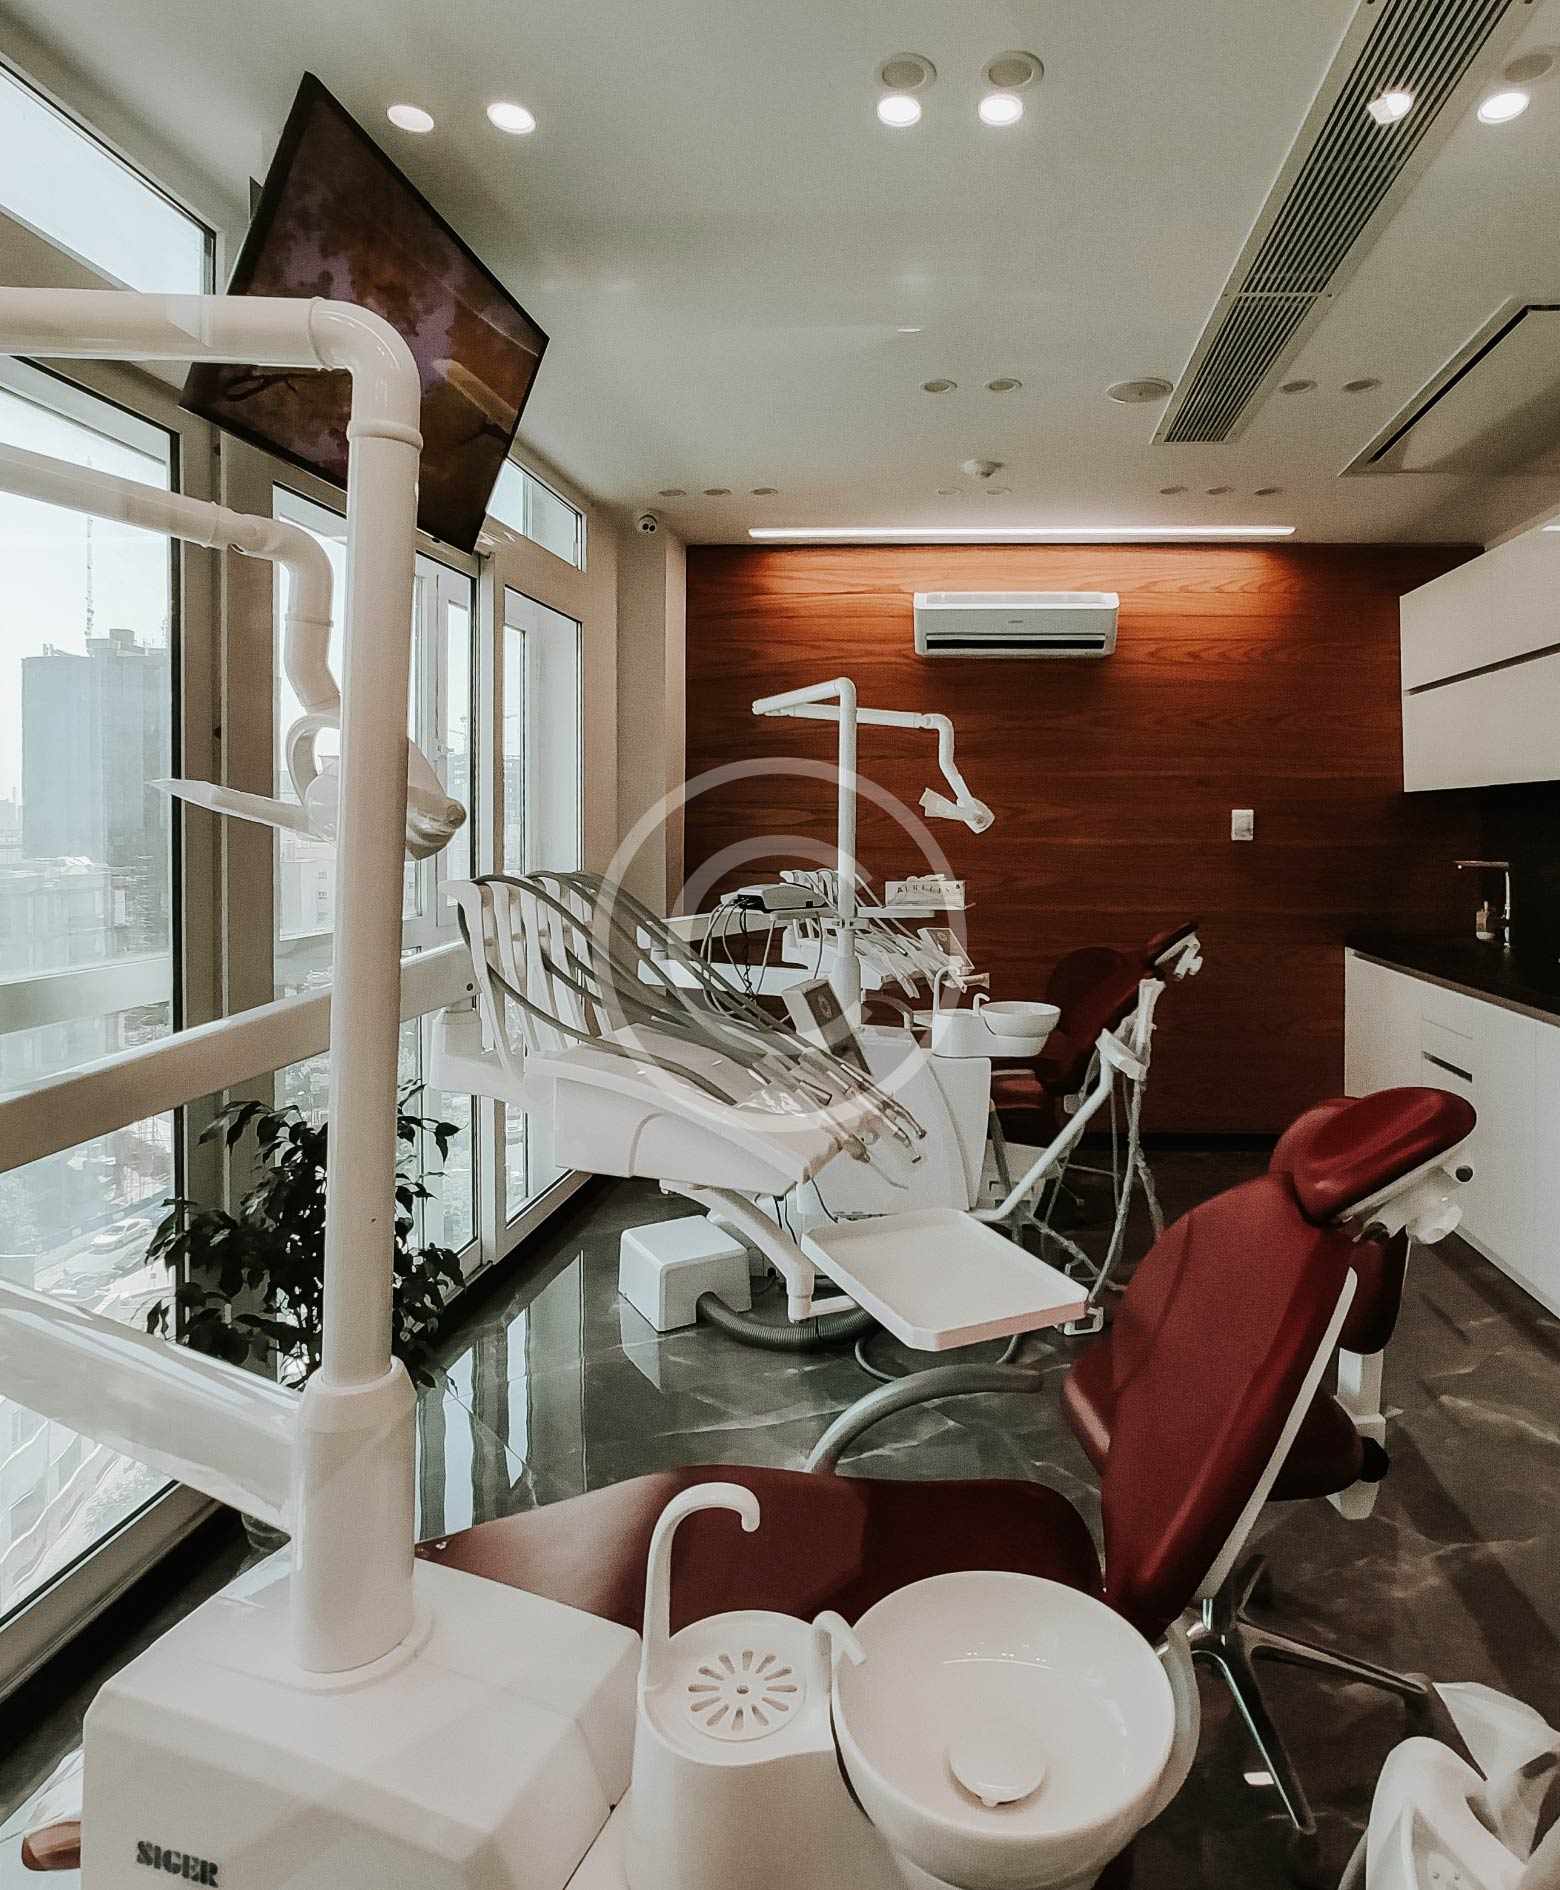 dentist-image2-copyright